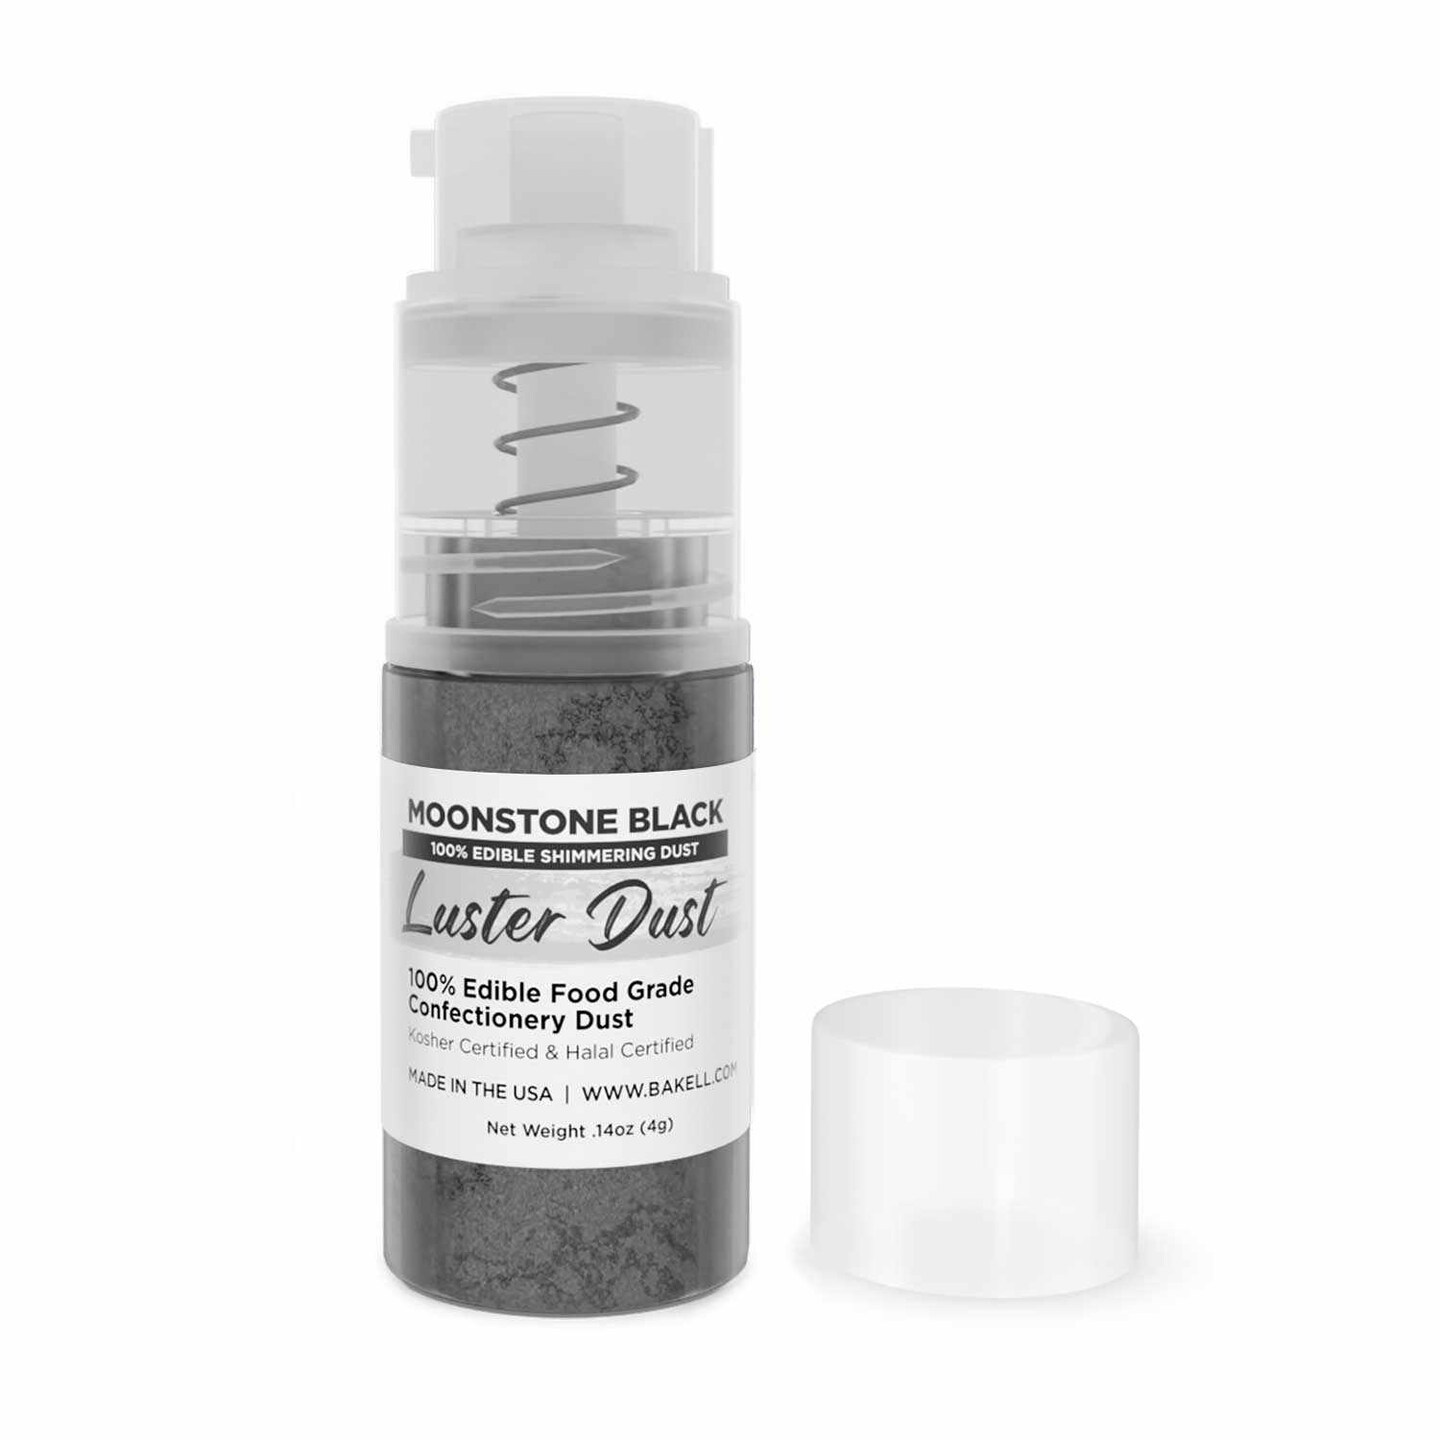 Moonstone Black Luster Dust Spray | Luster Dust Edible Glitter Spray Dust for Cakes, Cookies, Desserts, Paint. FDA Compliant (4 Gram Pump)